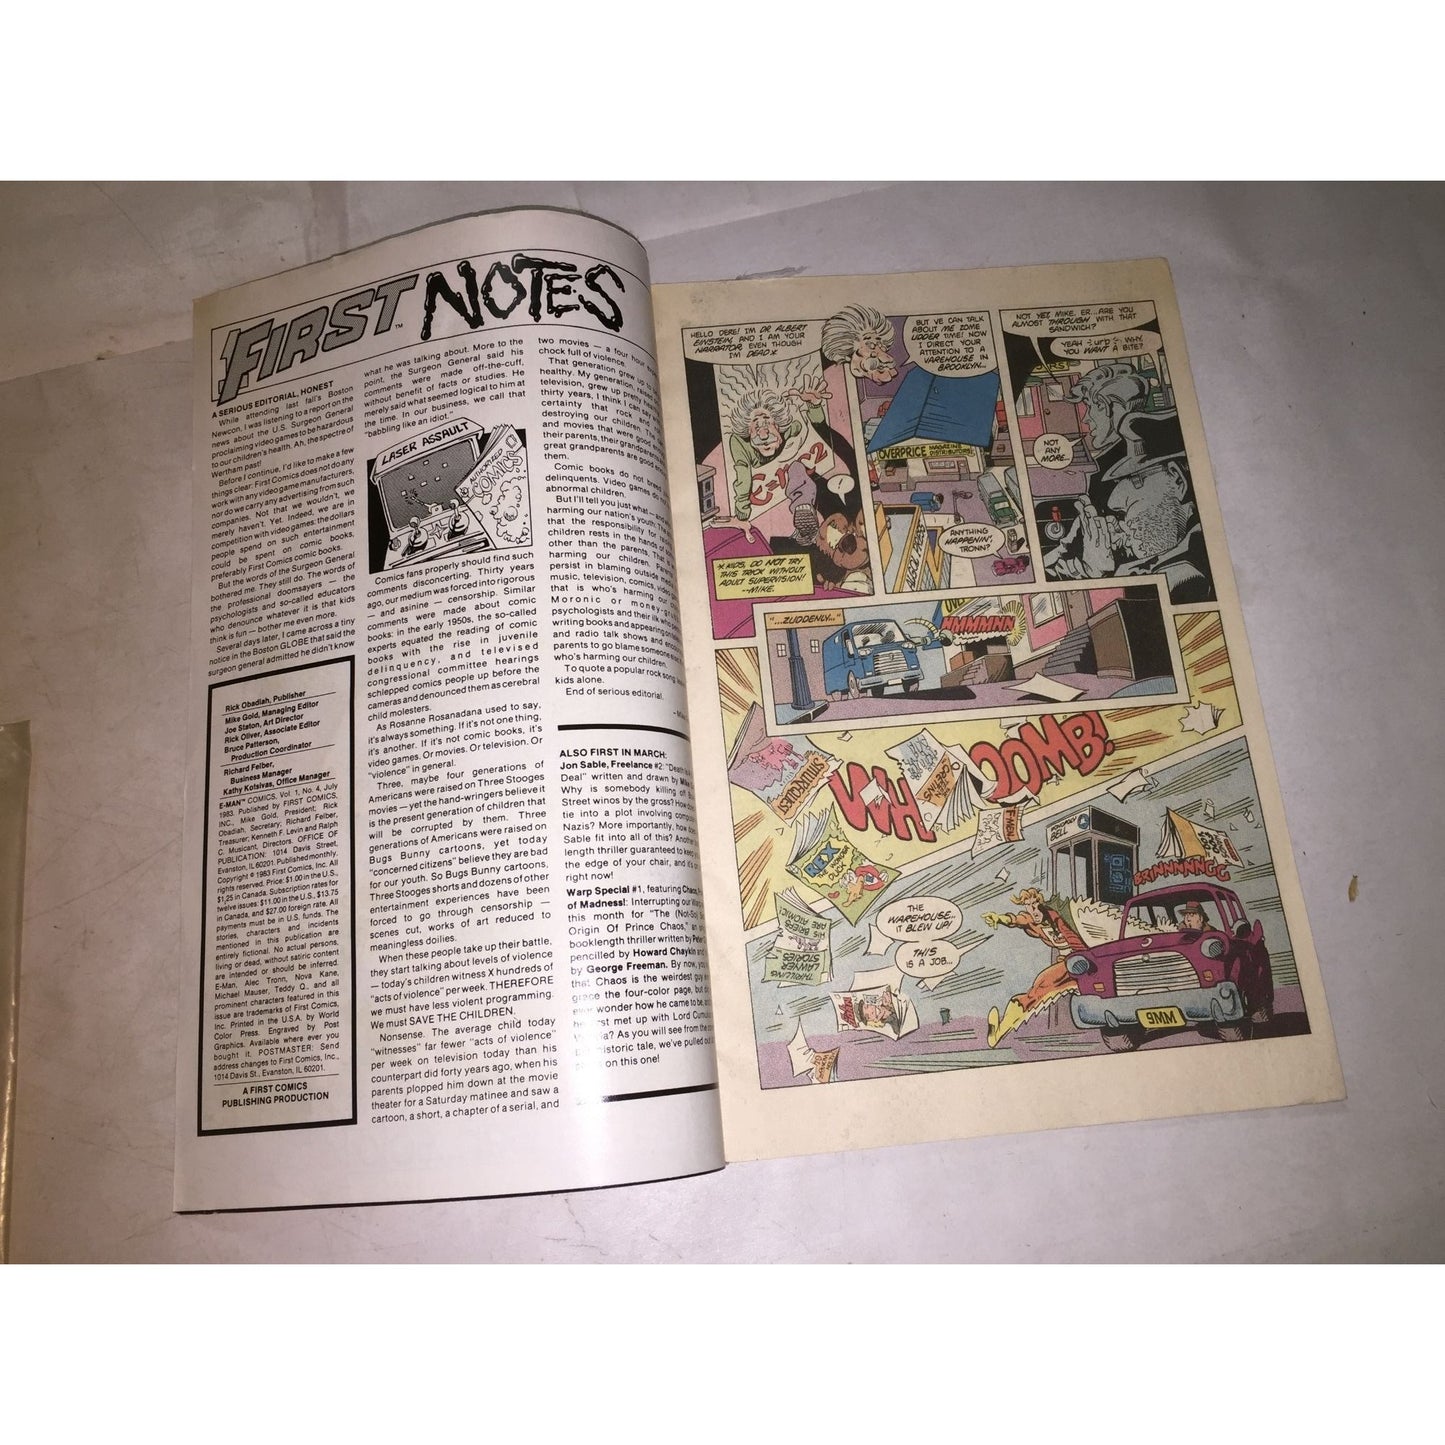 E-Man First Comics 1983 Vintage Comic Book